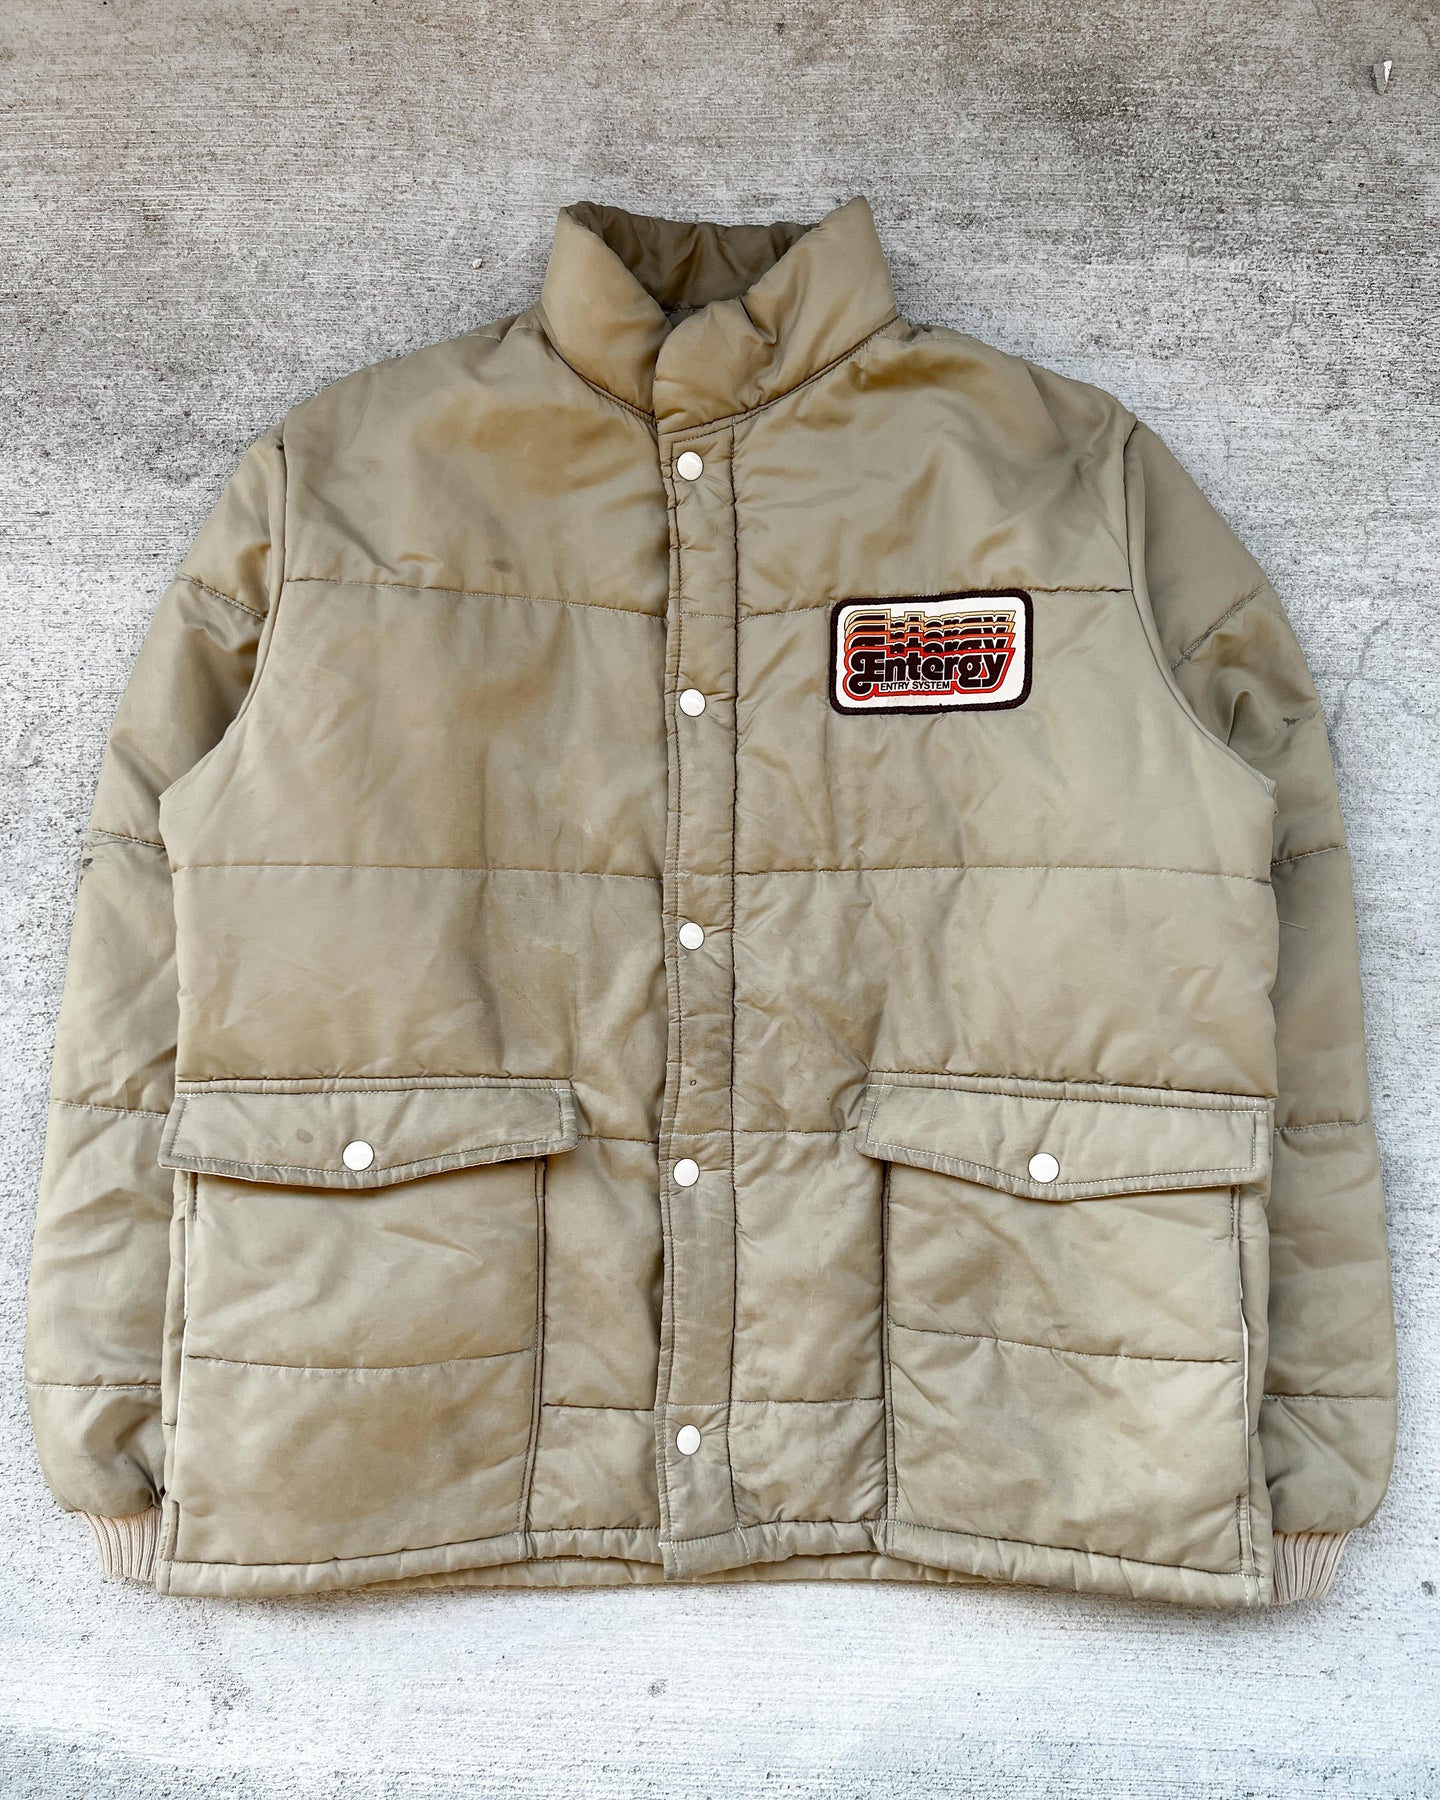 1980s Entergy Entry System Puffer Jacket - Size Large